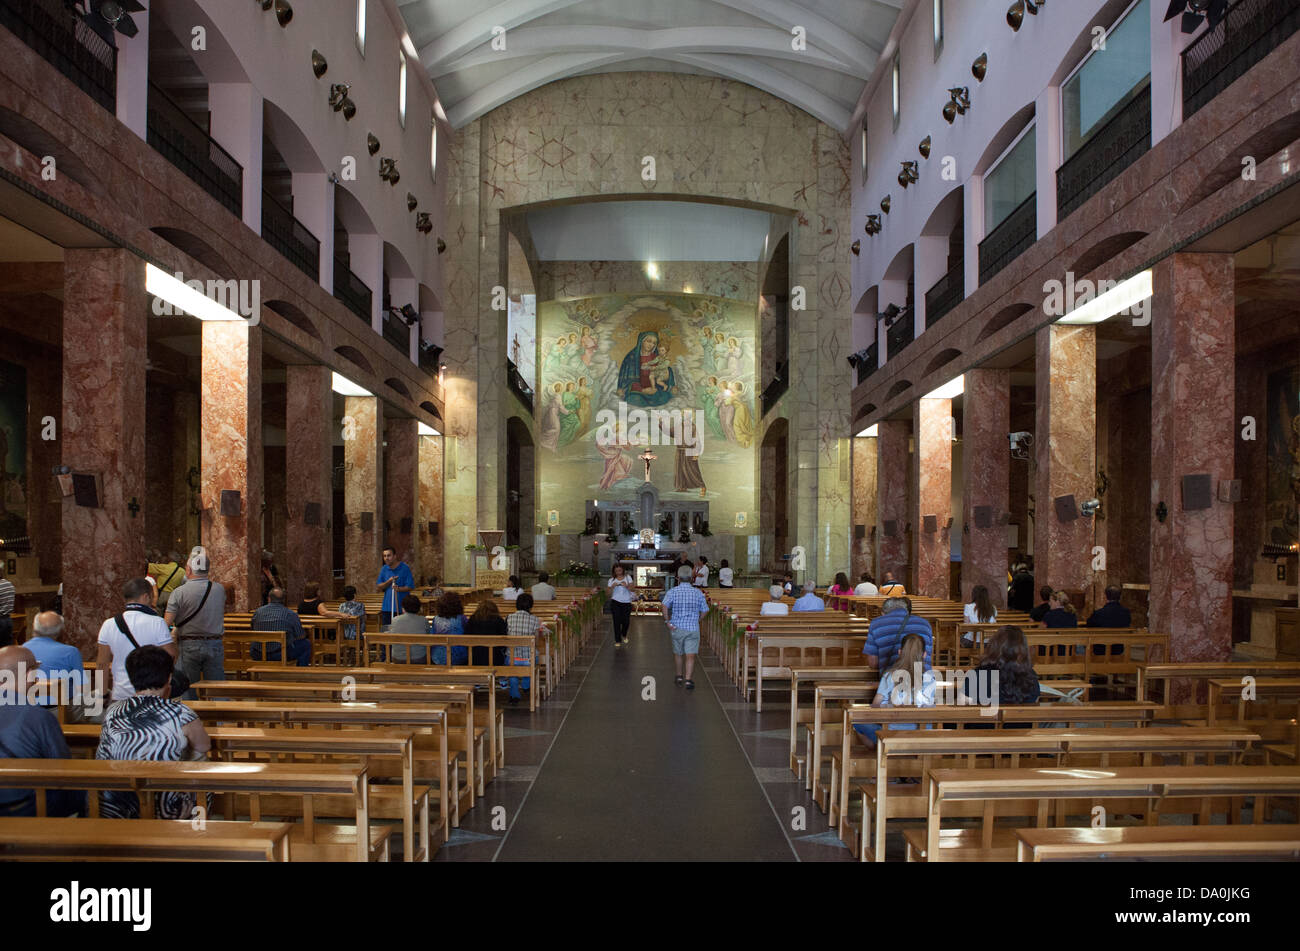 San giovanni rotondo church hi-res stock photography and images - Alamy